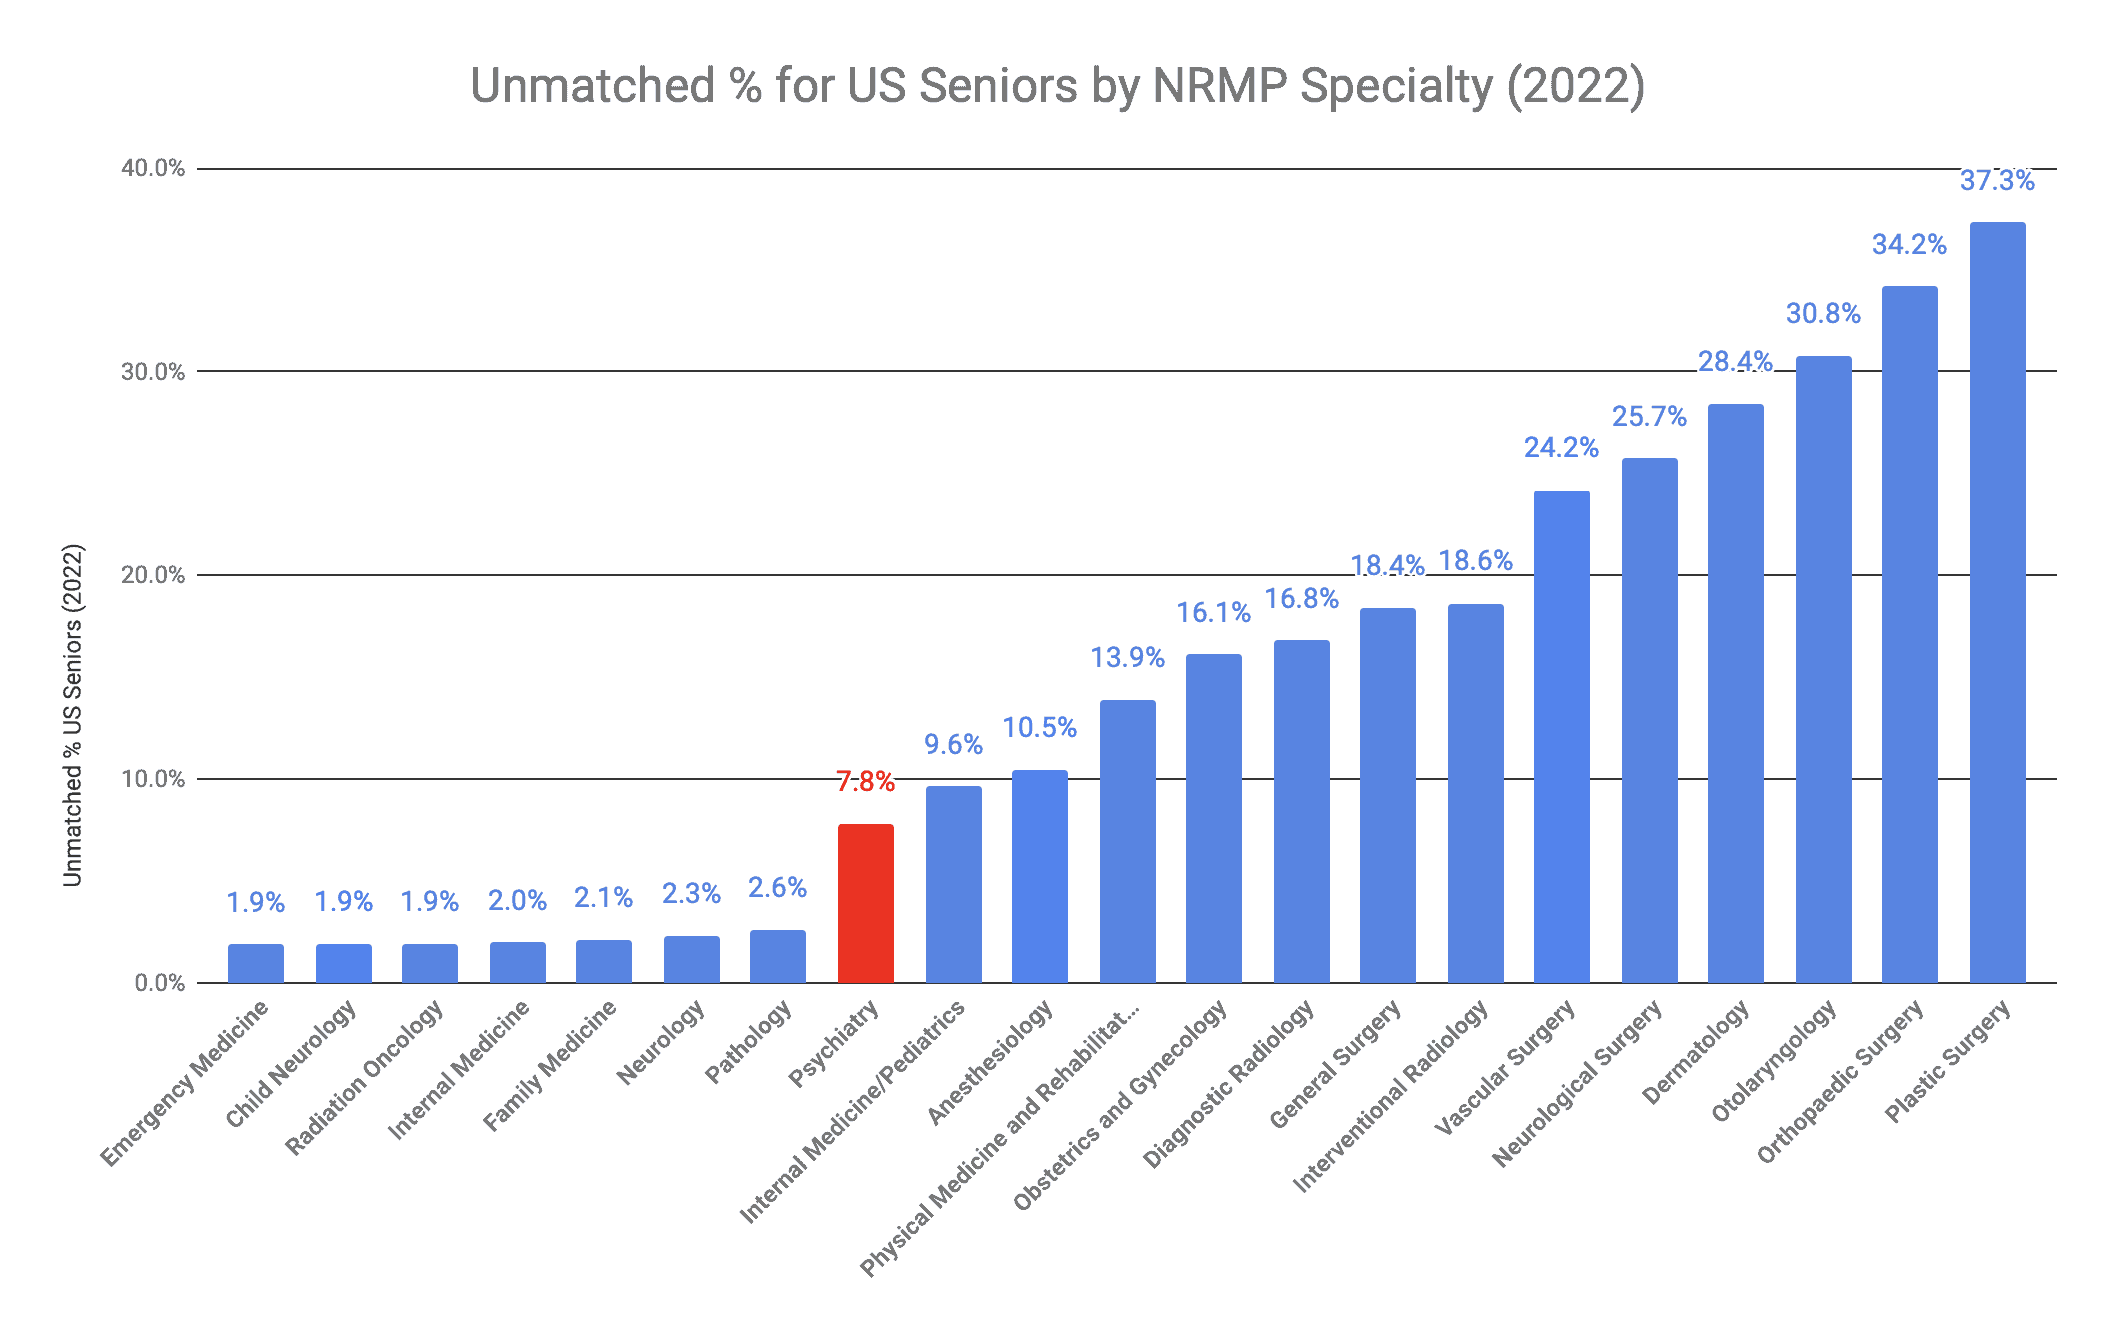 Psychiatry US Senior Unmatched Percentage 2022 Match